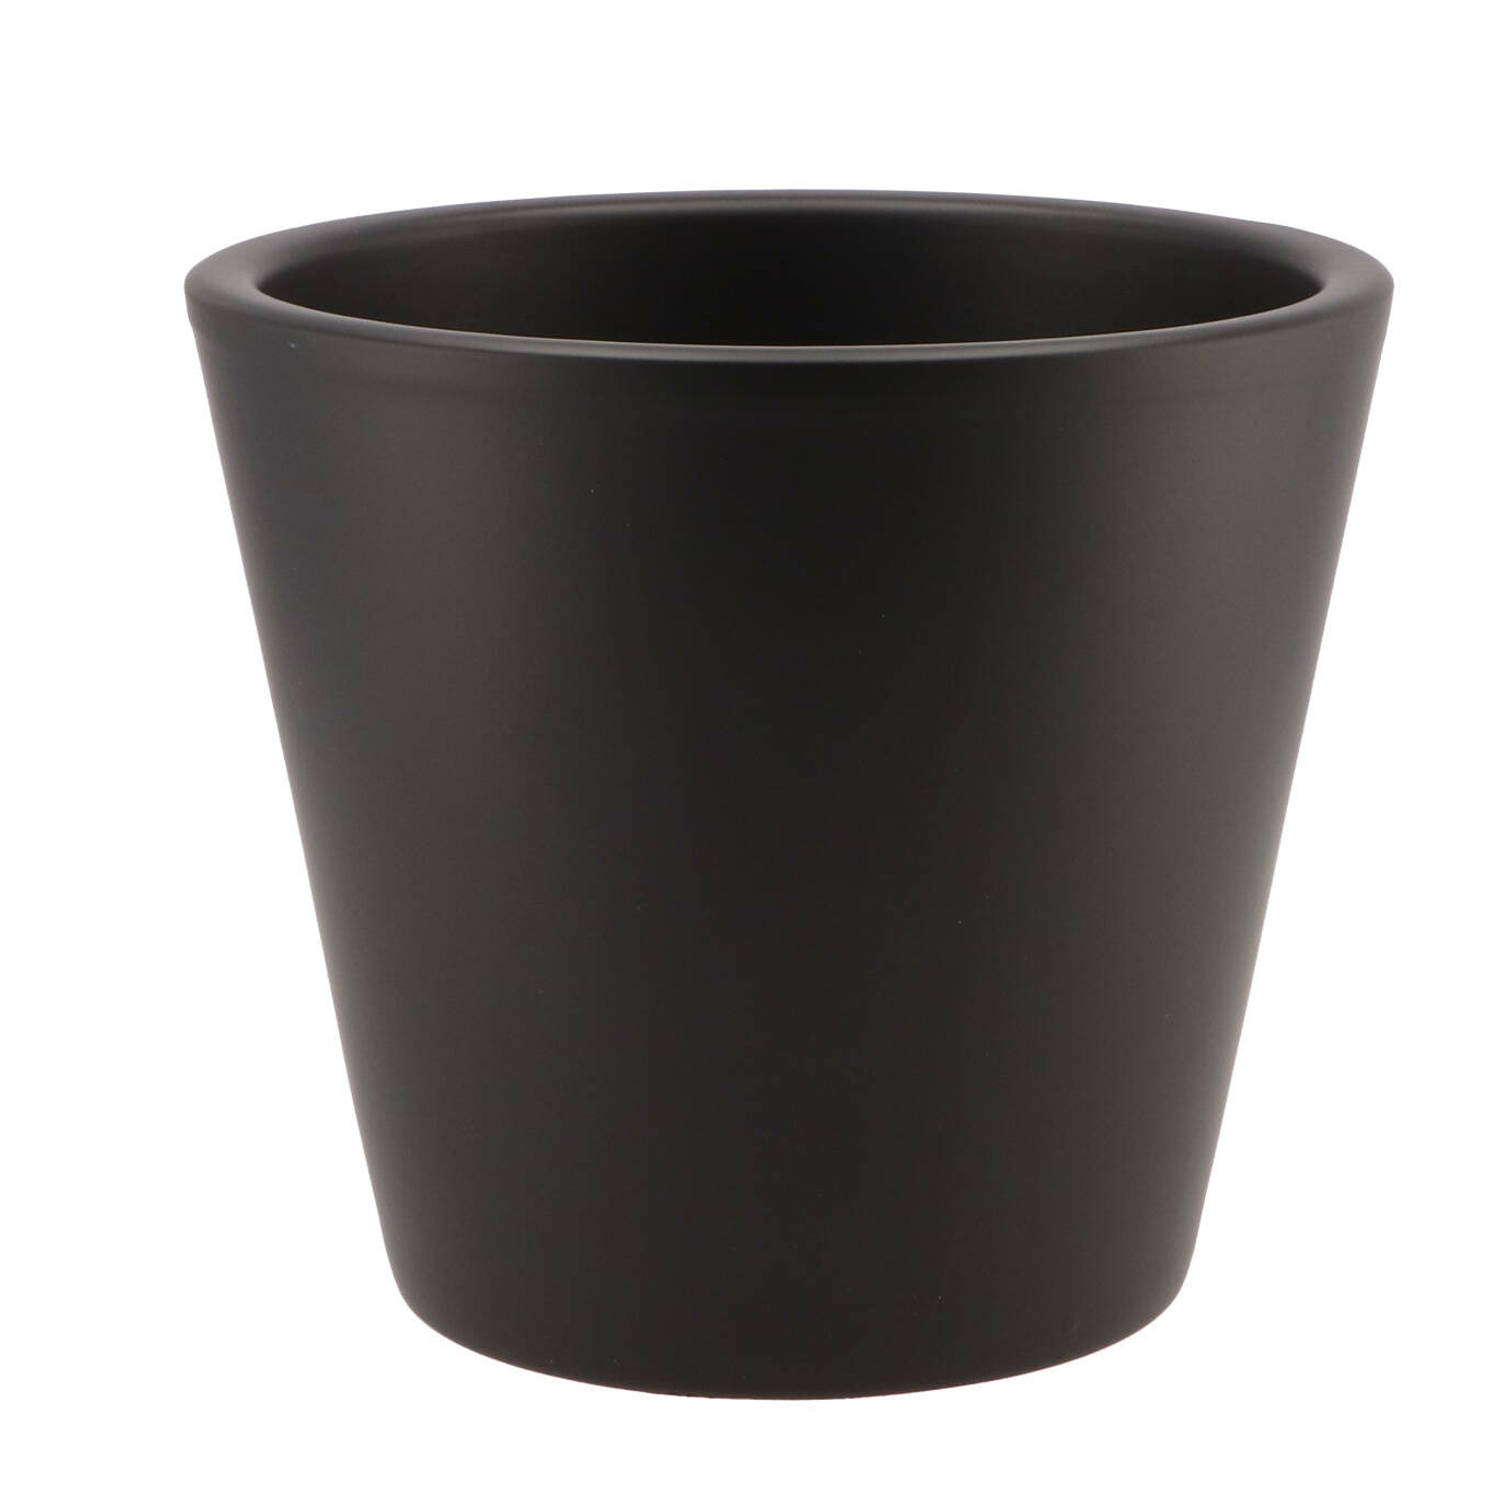 DK Design Bloempot/plantenpot - Vinci - zwart mat - voor kamerplant - D19 x H21 cm